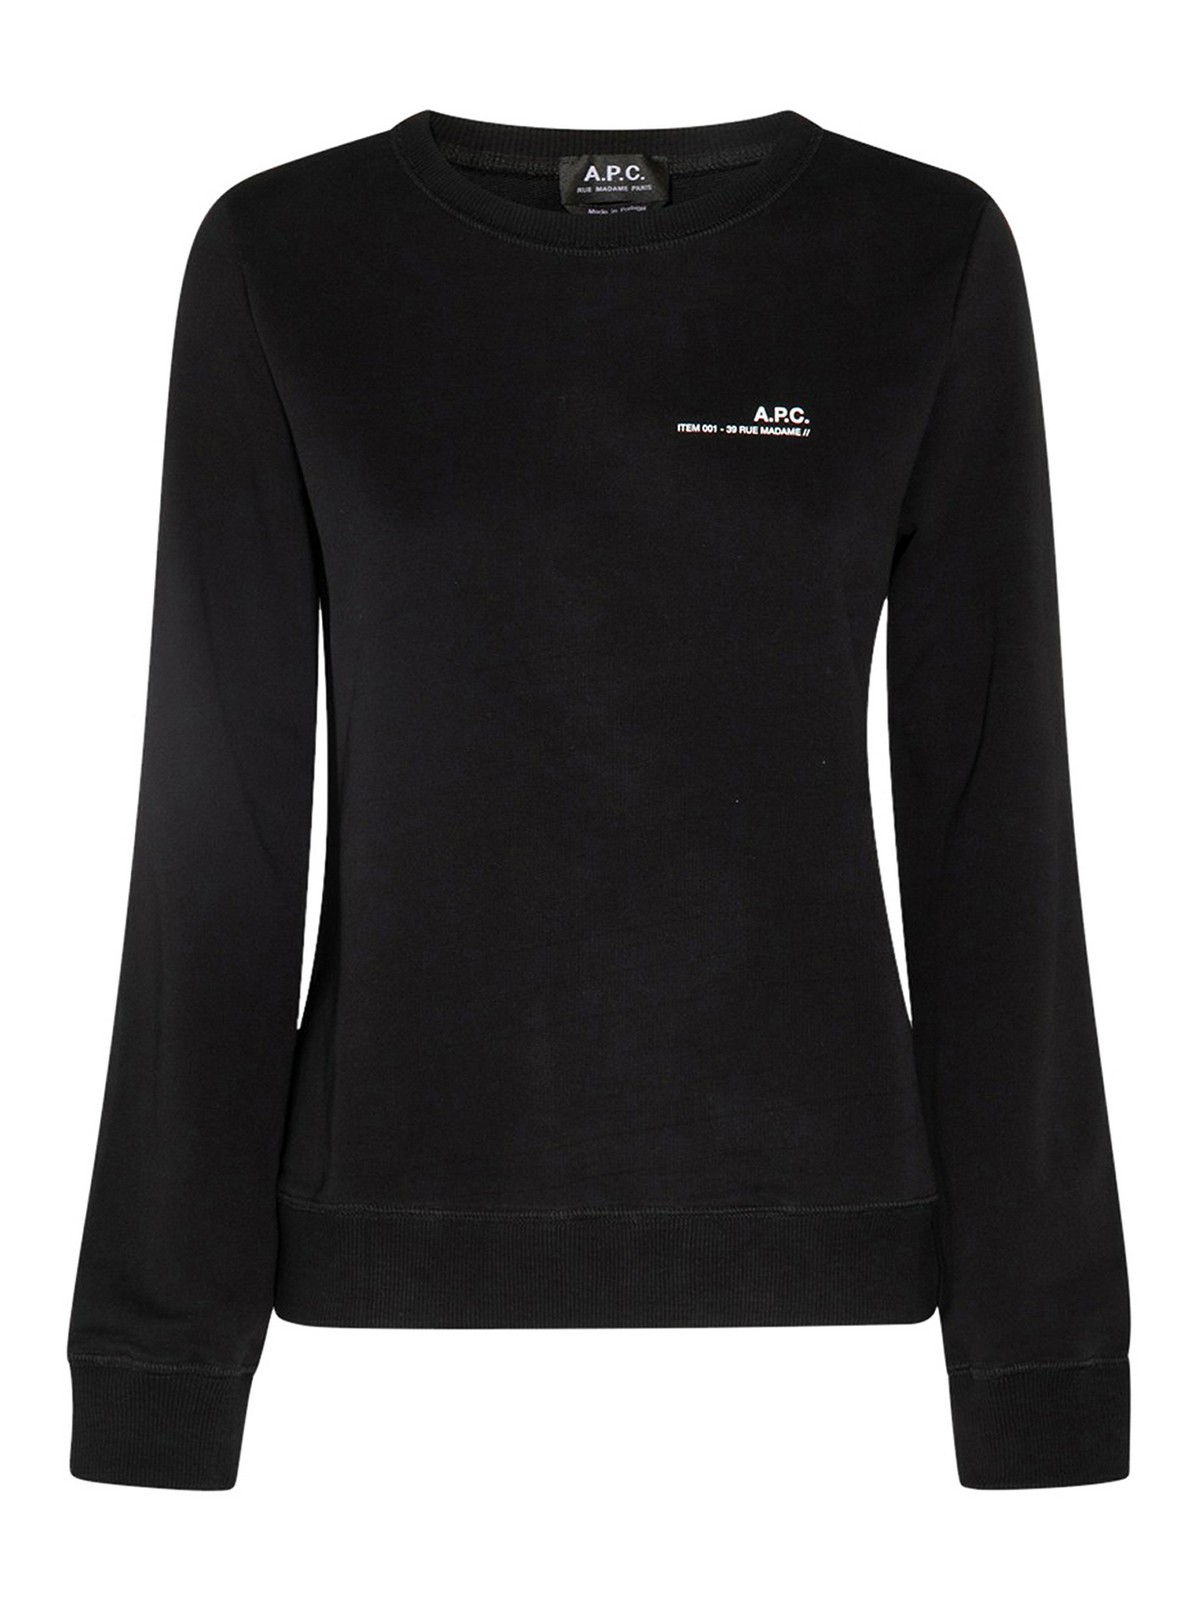 Apc Cotton Sweatshirt In Black